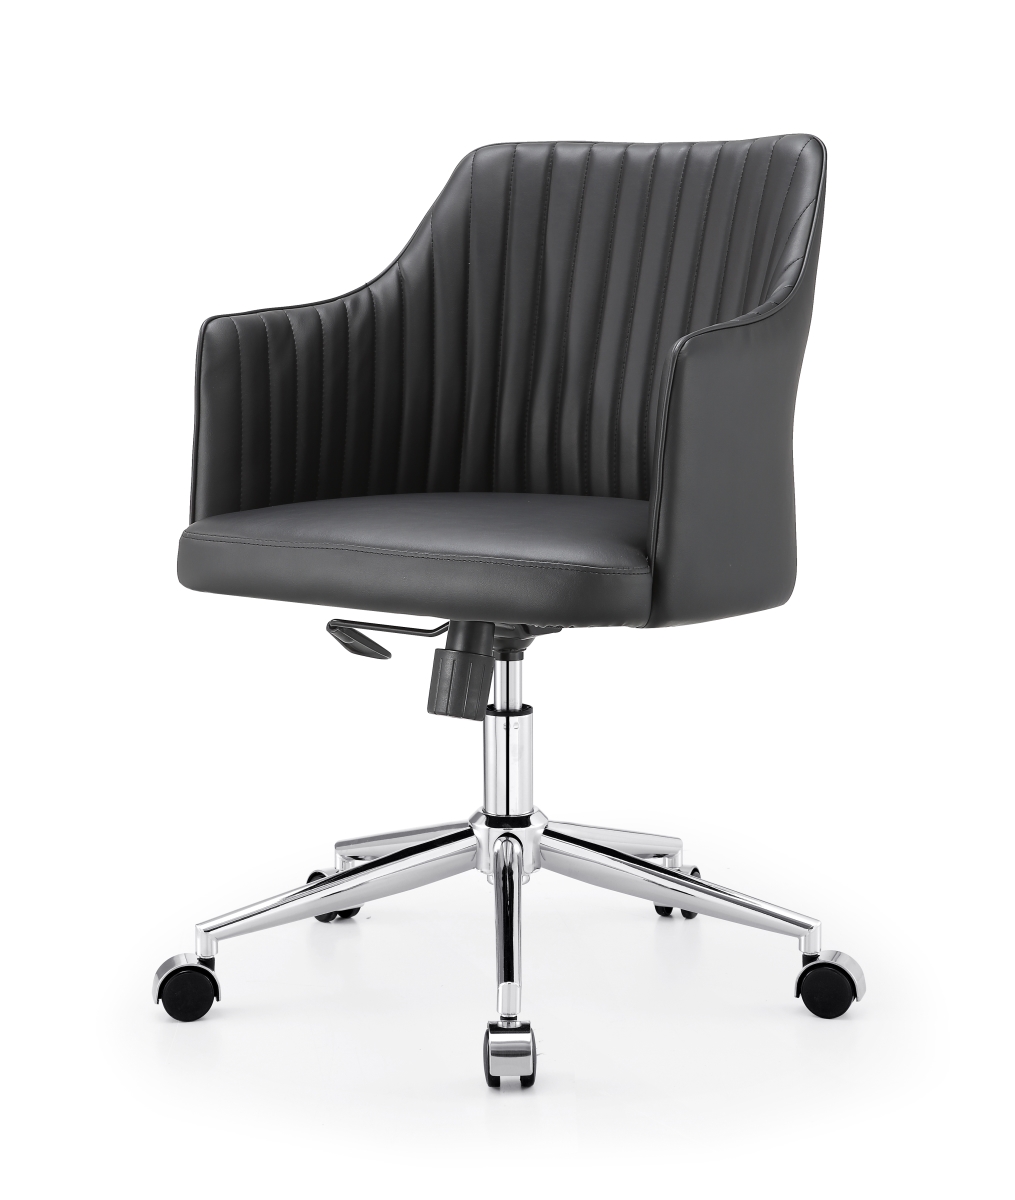 64-blk M64 Flock Office Chair In Vegan Leather - Chrome & Black